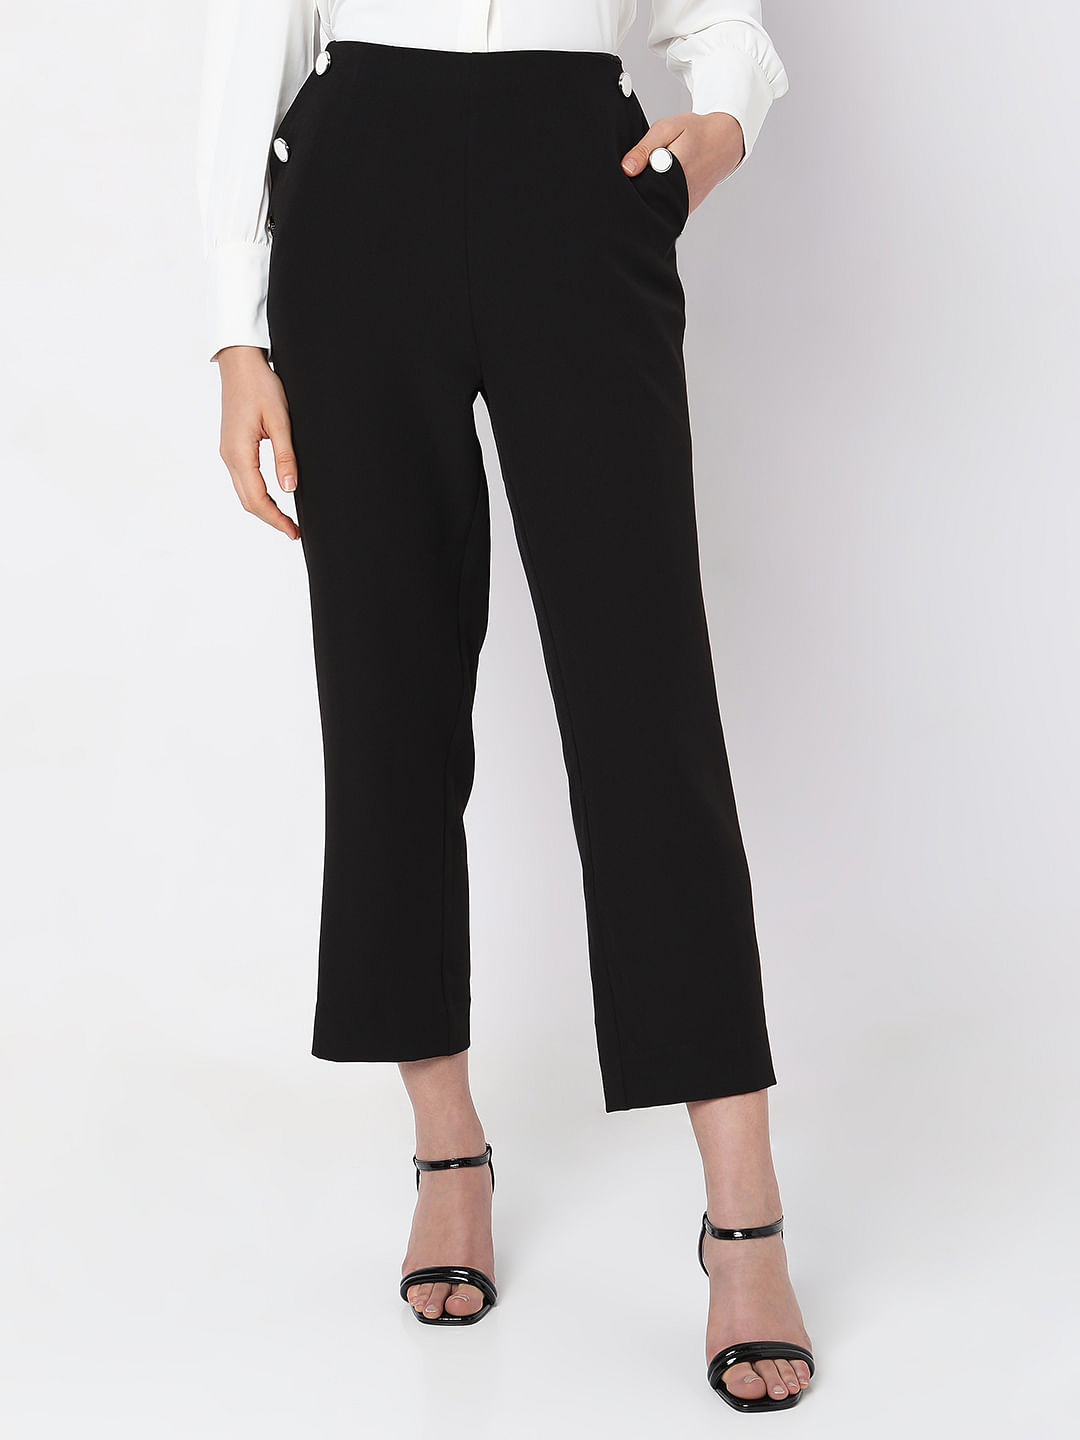 Pants with Dior Oblique Belt Black Wool Twill | DIOR FI